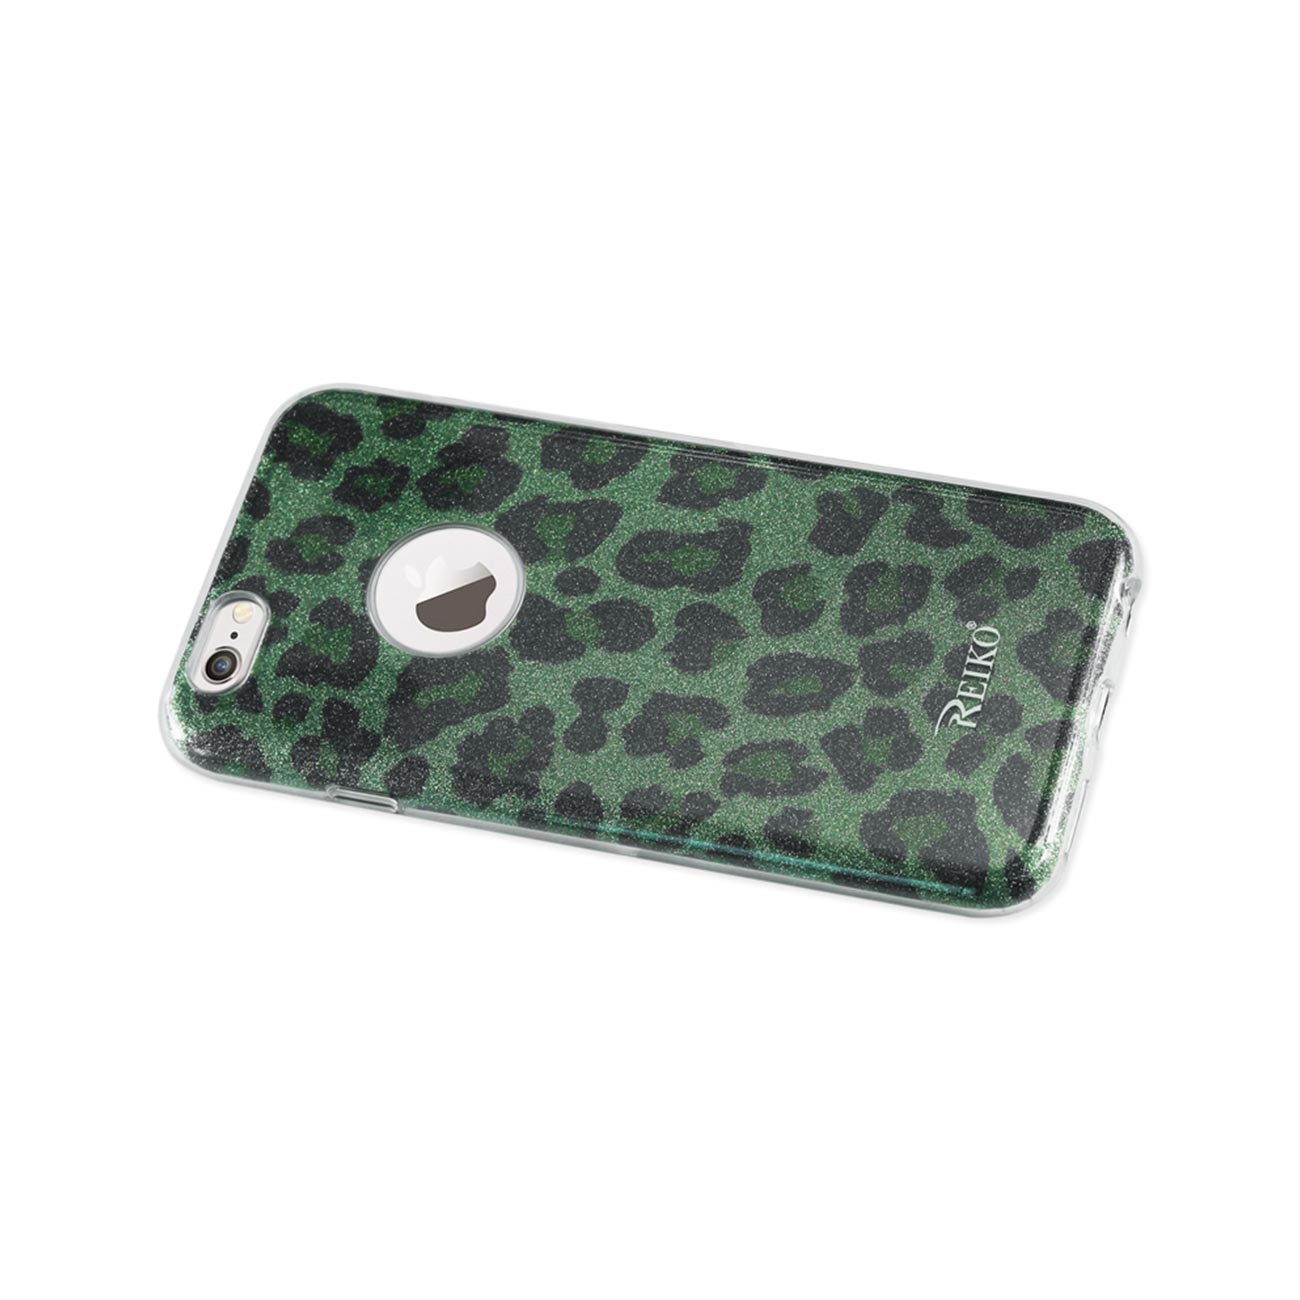 Case Hybrid Shine Glitter Shimmer Leopard iPhone 6/ 6S Green Color